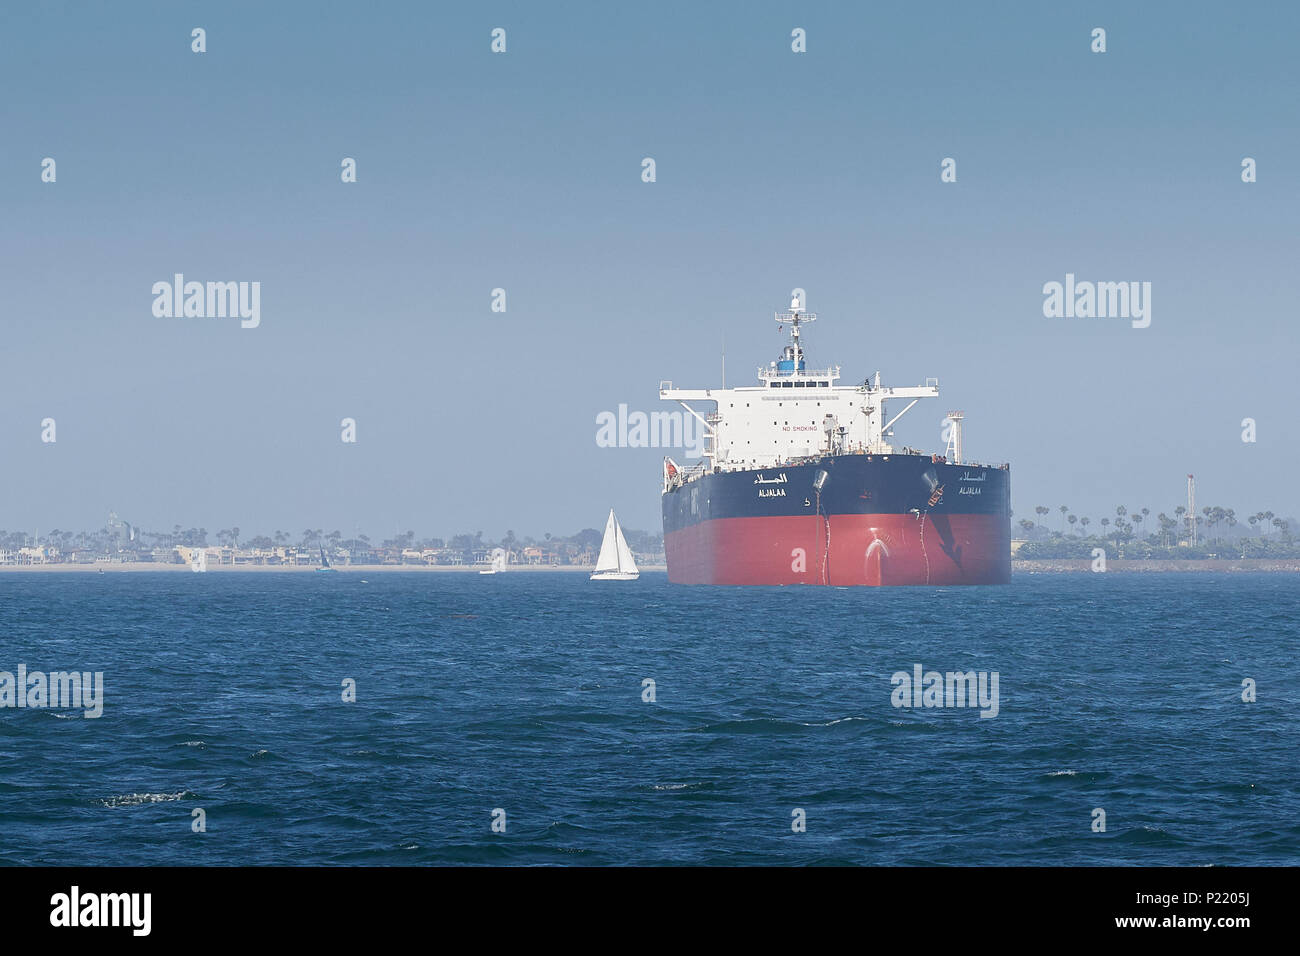 Crude Oil Tanker, ALJALLA, Anchored In The Port Of Long Beach, California, USA. Stock Photo